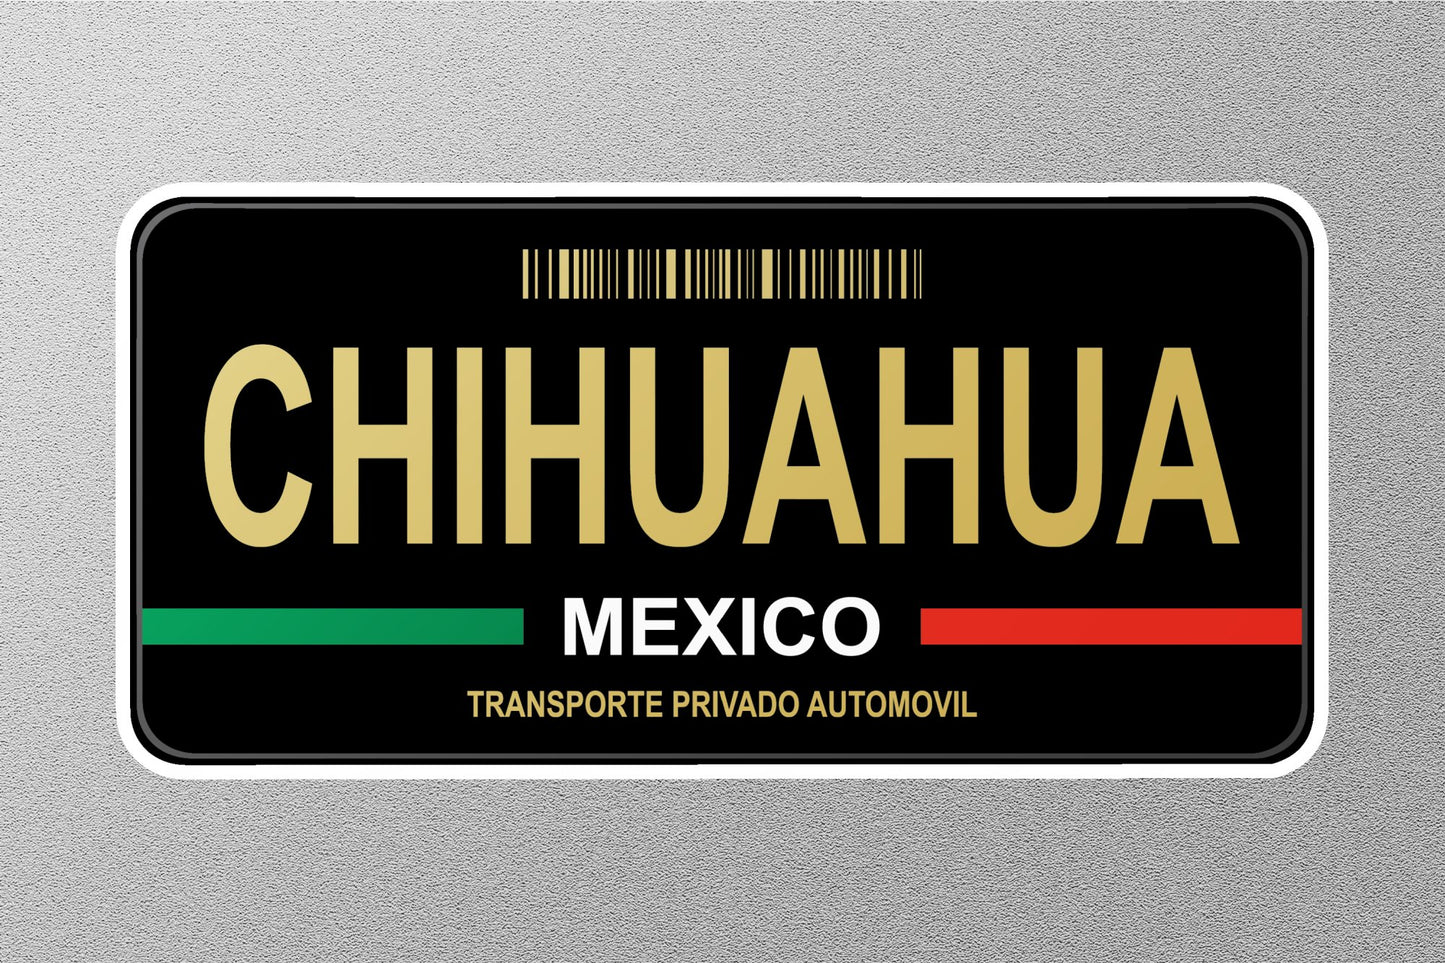 Chihuahua Mexico License Plat Sticker